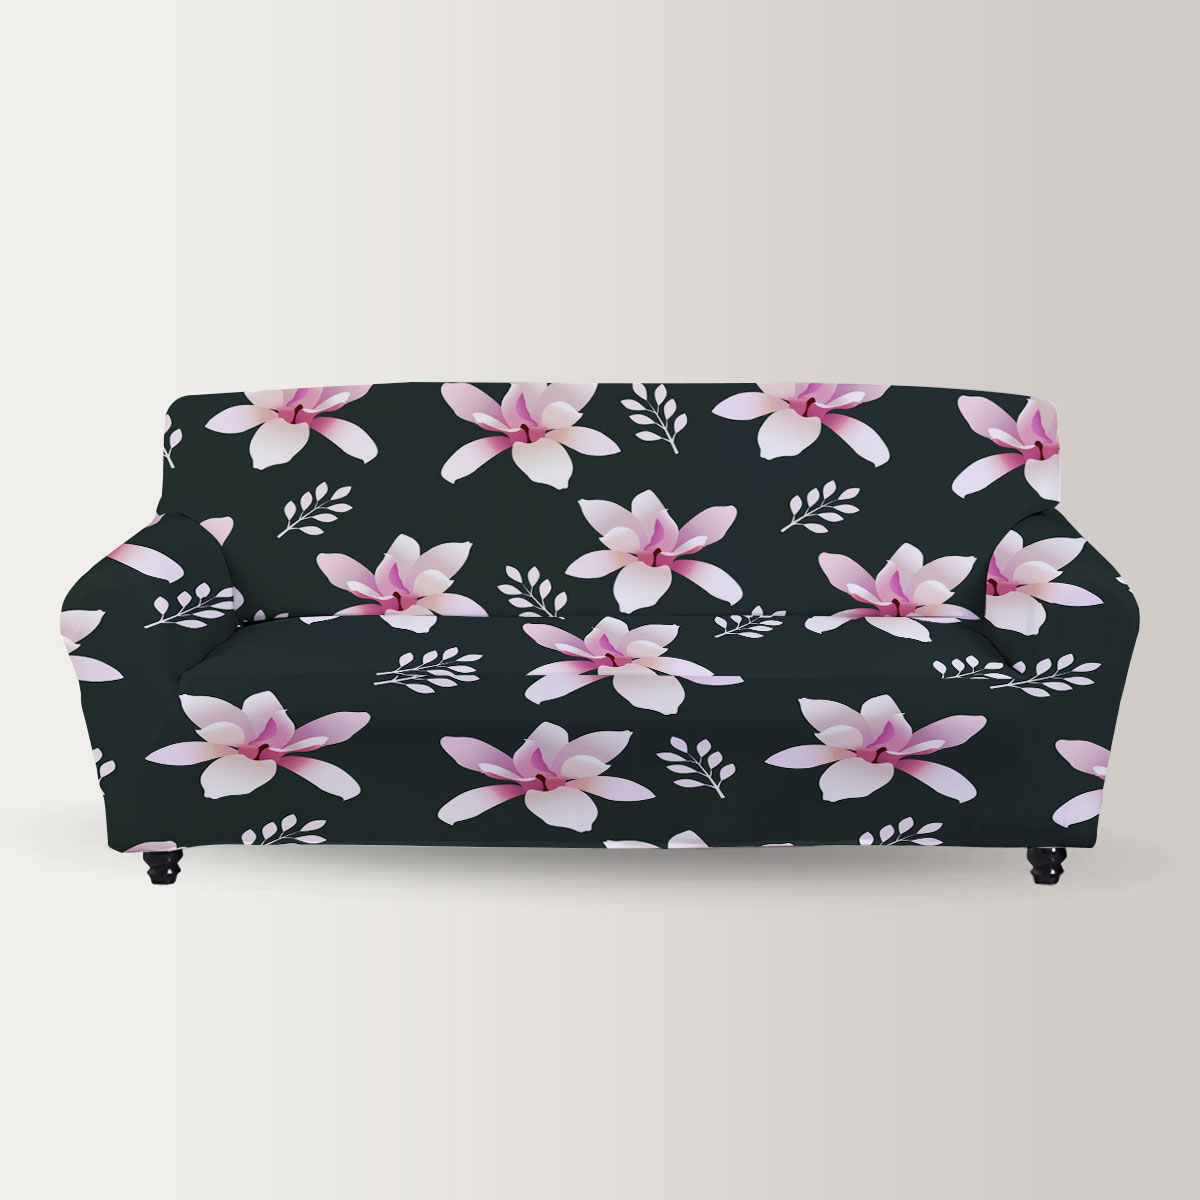 Magnolia On Black Background Sofa Cover